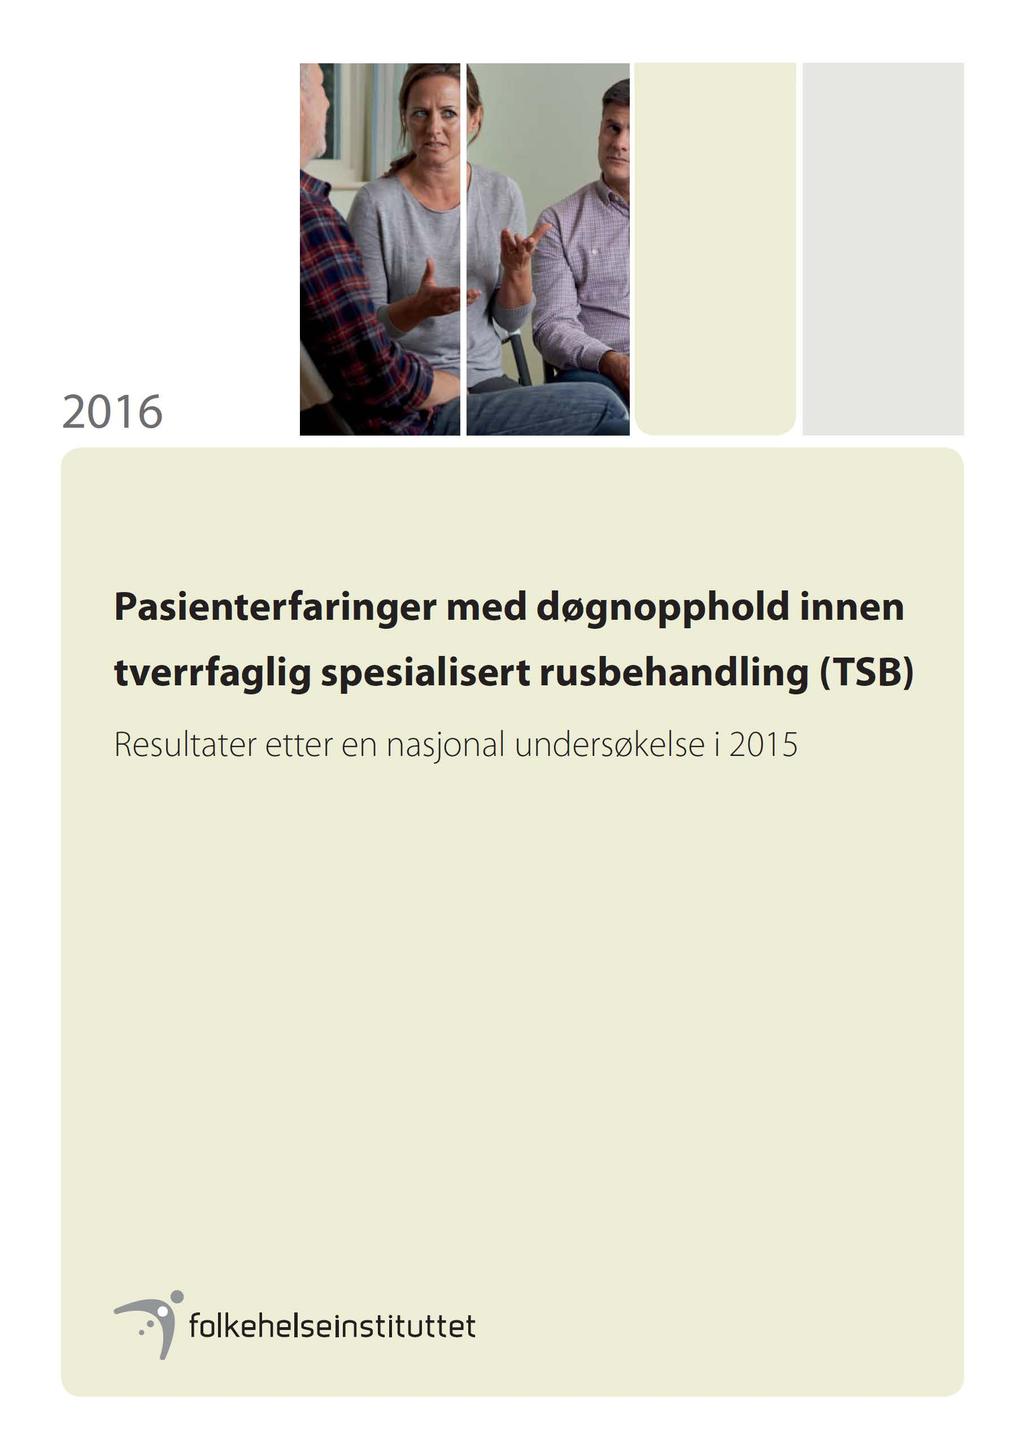 PasOpp-rapport 2016: 90 Akershus